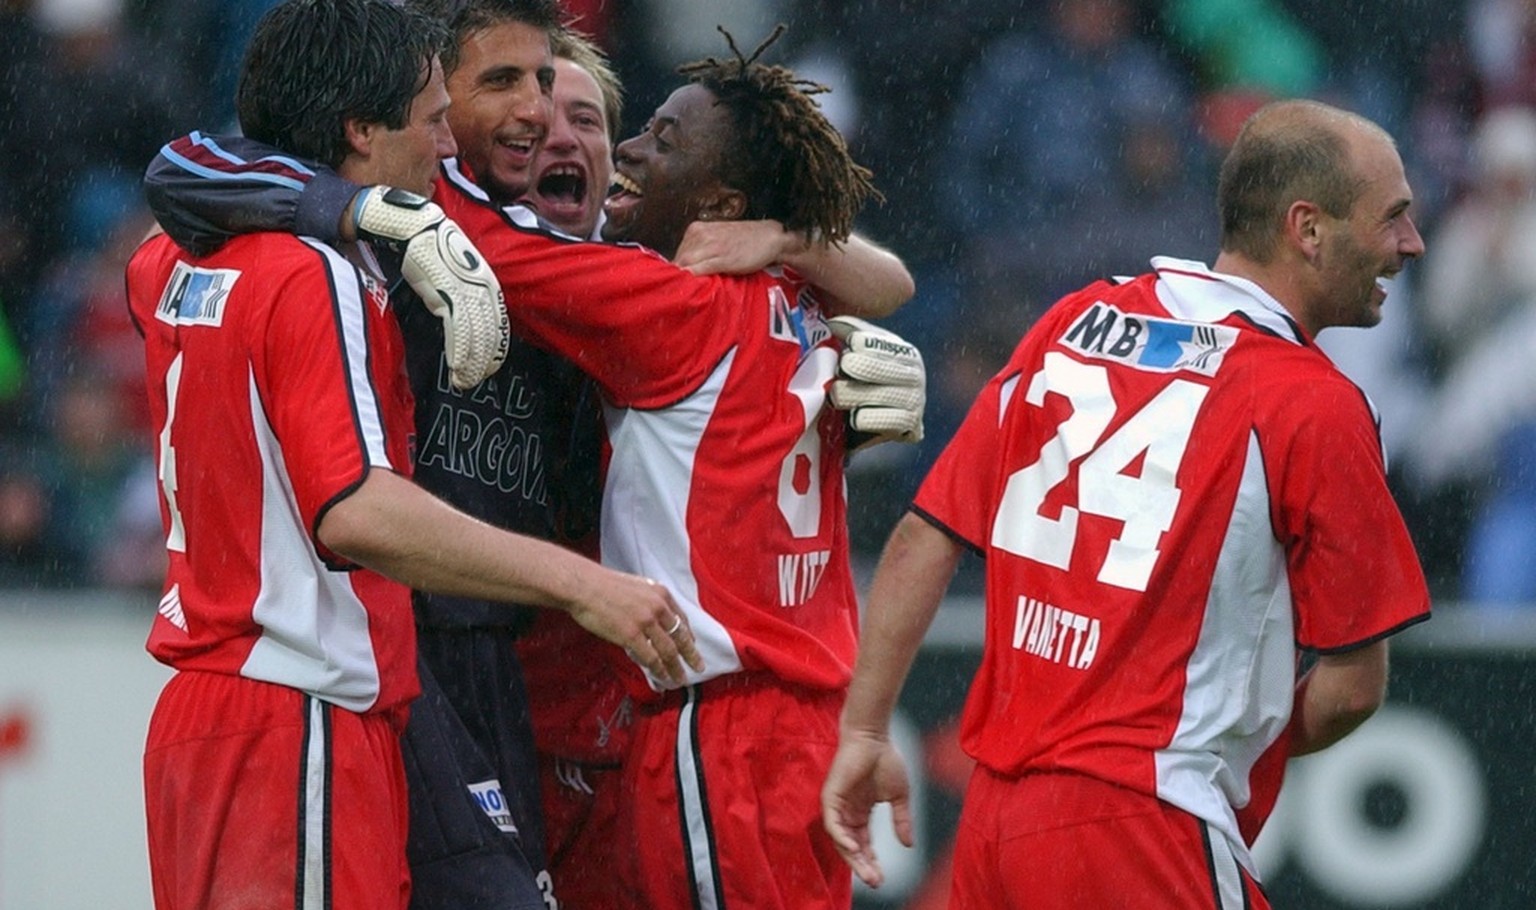 Seine Teamkollegen feiern Aarau-Goalie Massimo Colomba nach dem Goalie-Goal.